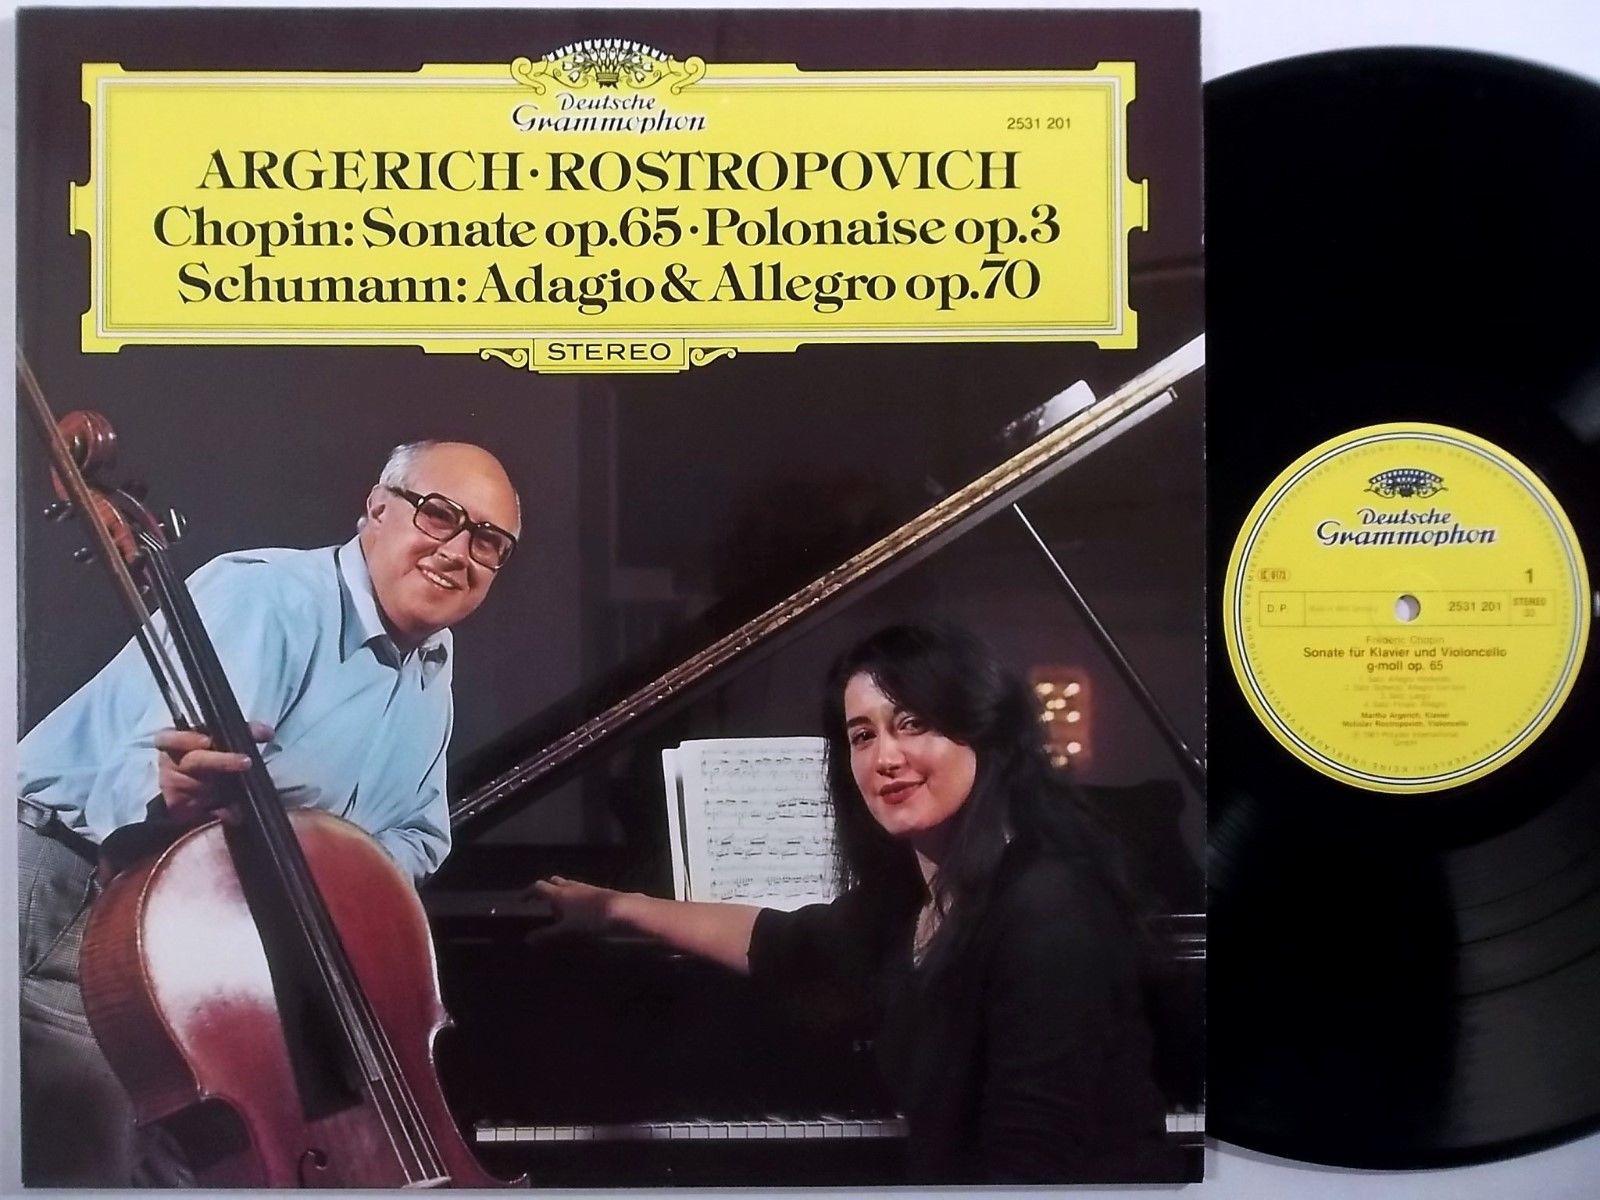 ARGERICH ROSTROPOVICH chopin Sonata op 65 DG LP 2531 201 very nice NM